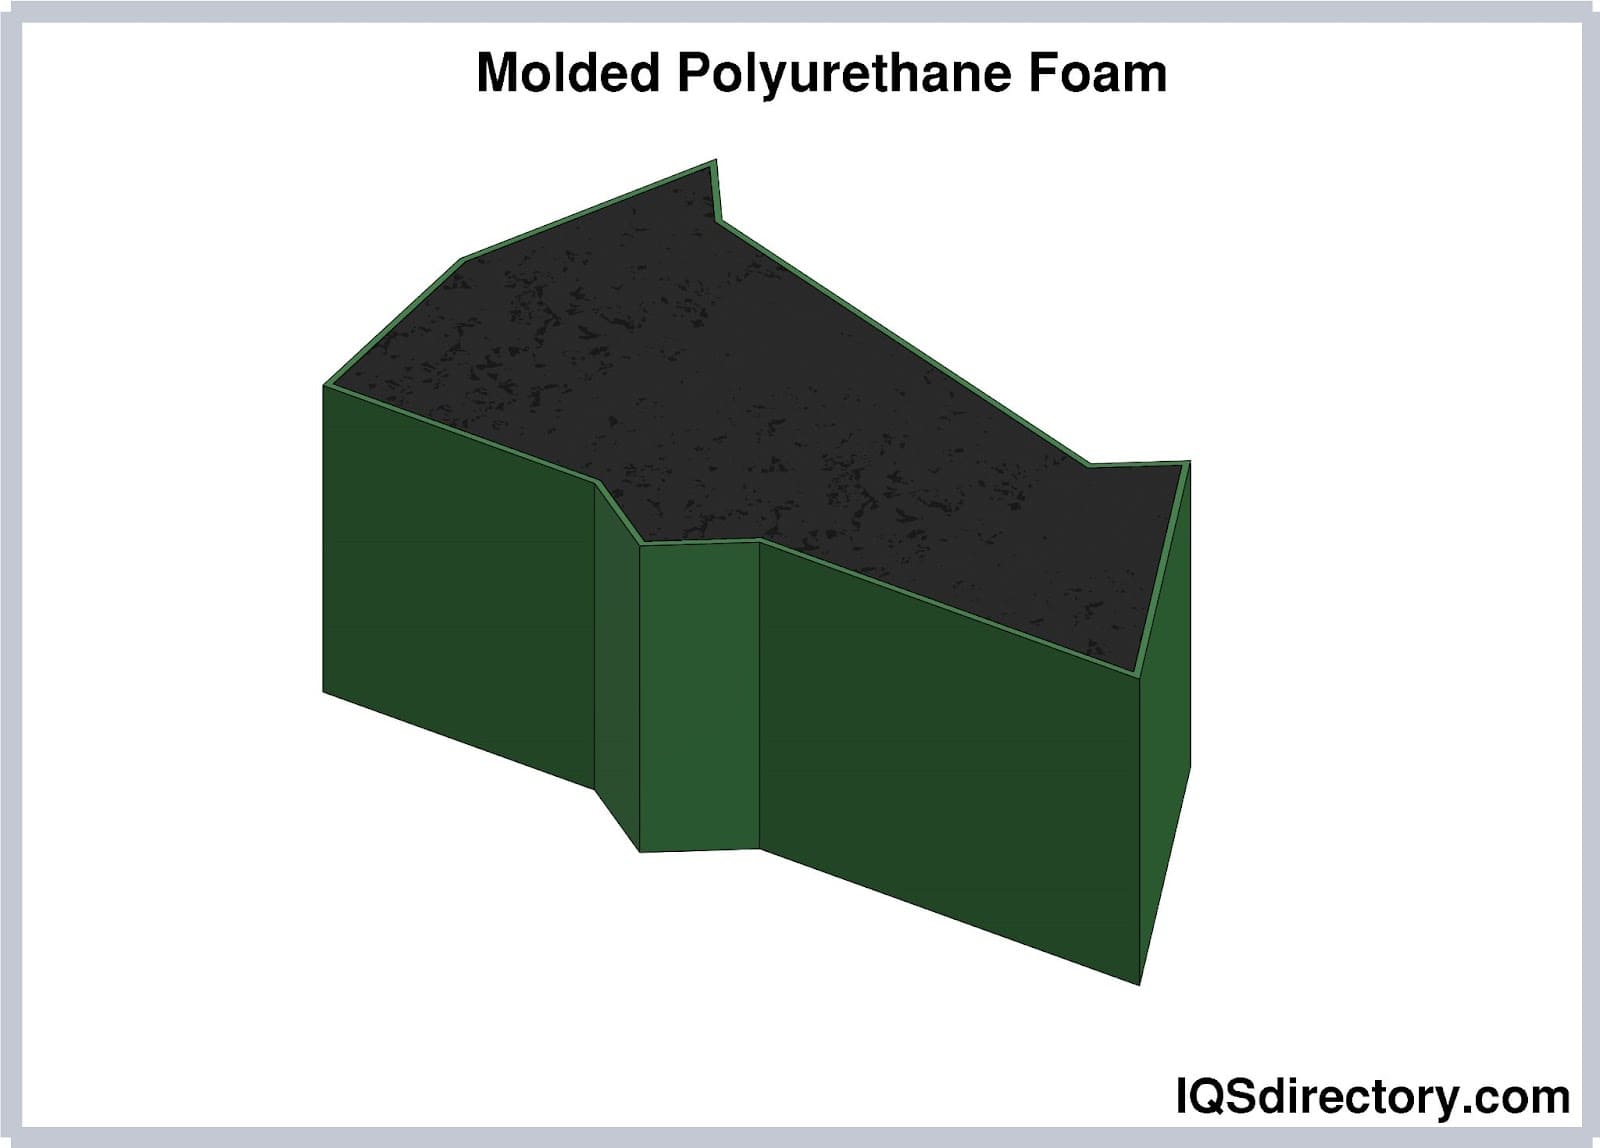 https://www.iqsdirectory.com/articles/polyurethane-molding/molded-polyurethane-foam.jpg